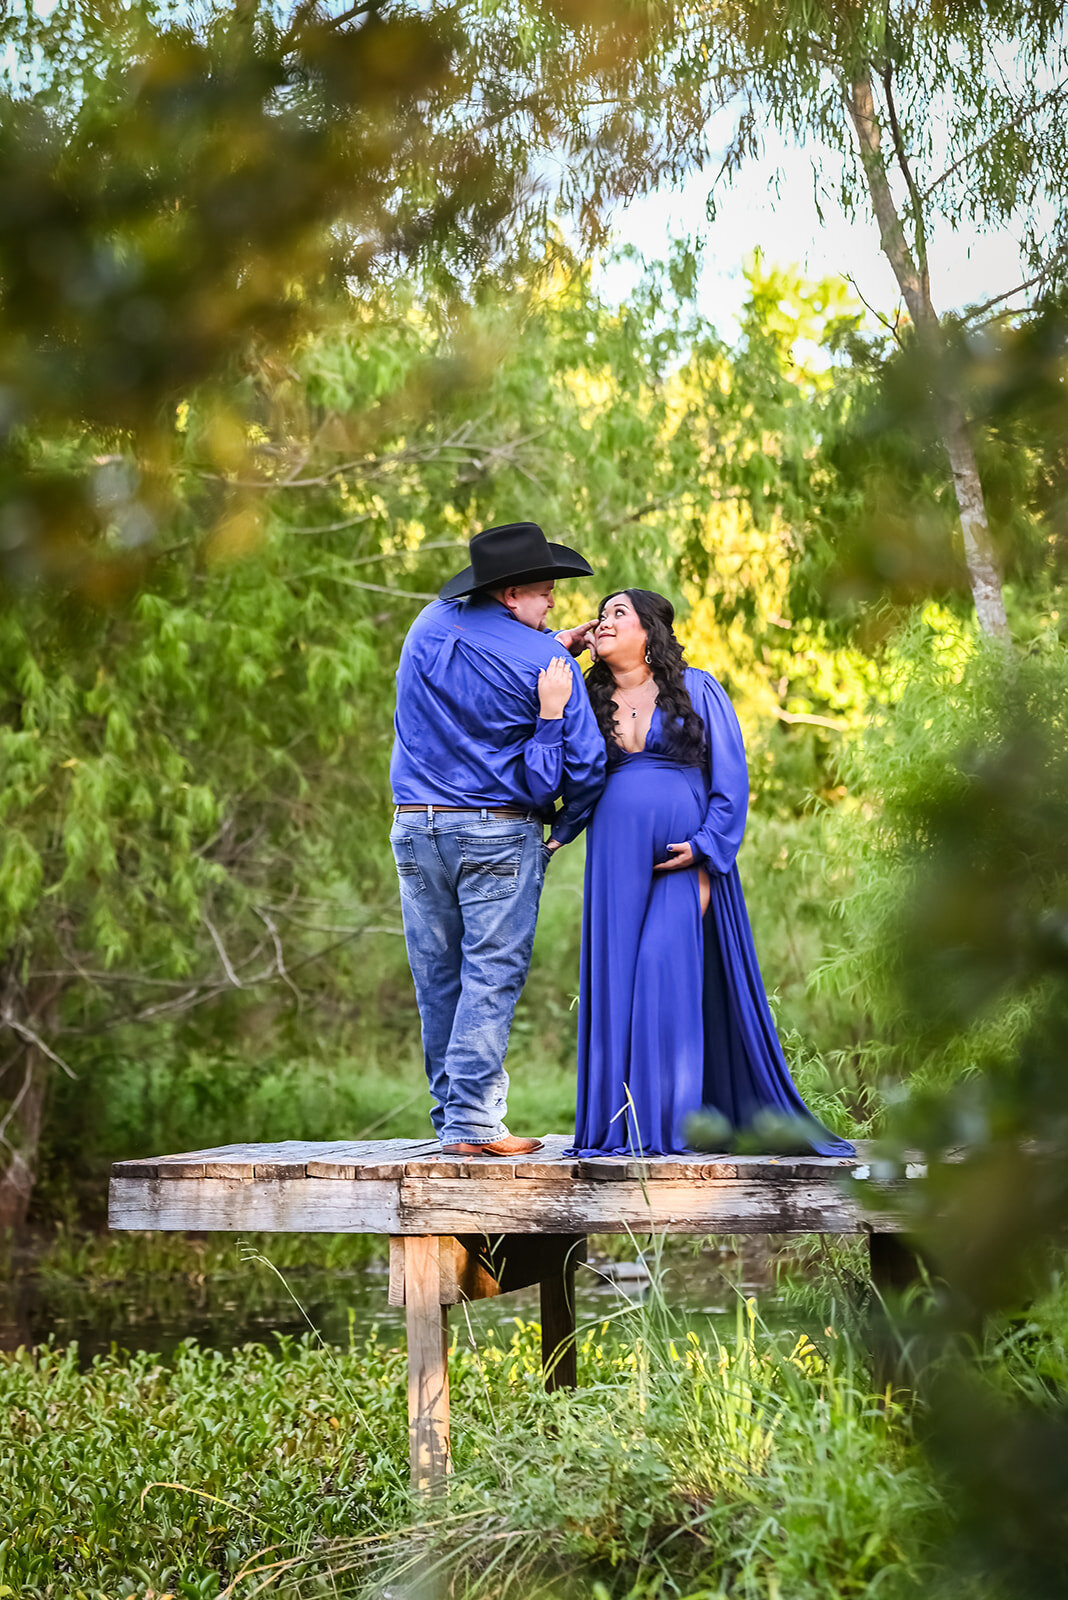 Couple - Maternity photoshoot on dock  Natasha Snyder PHotography in Santa Fe Texas